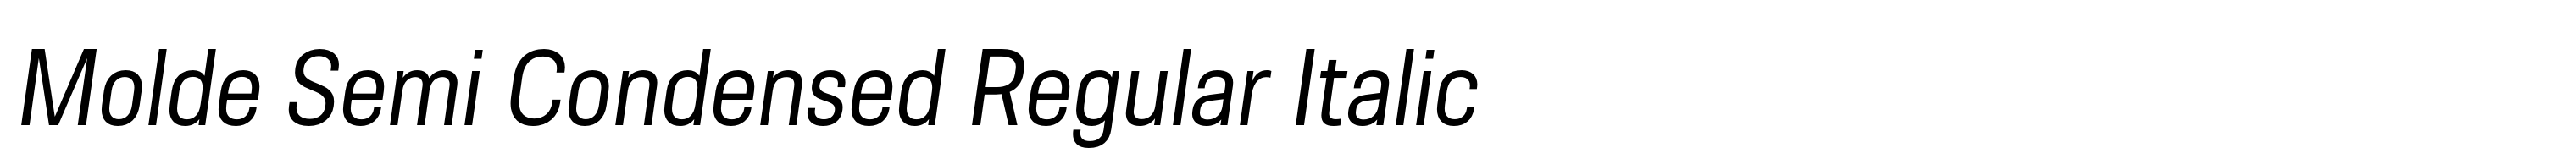 Molde Semi Condensed Regular Italic